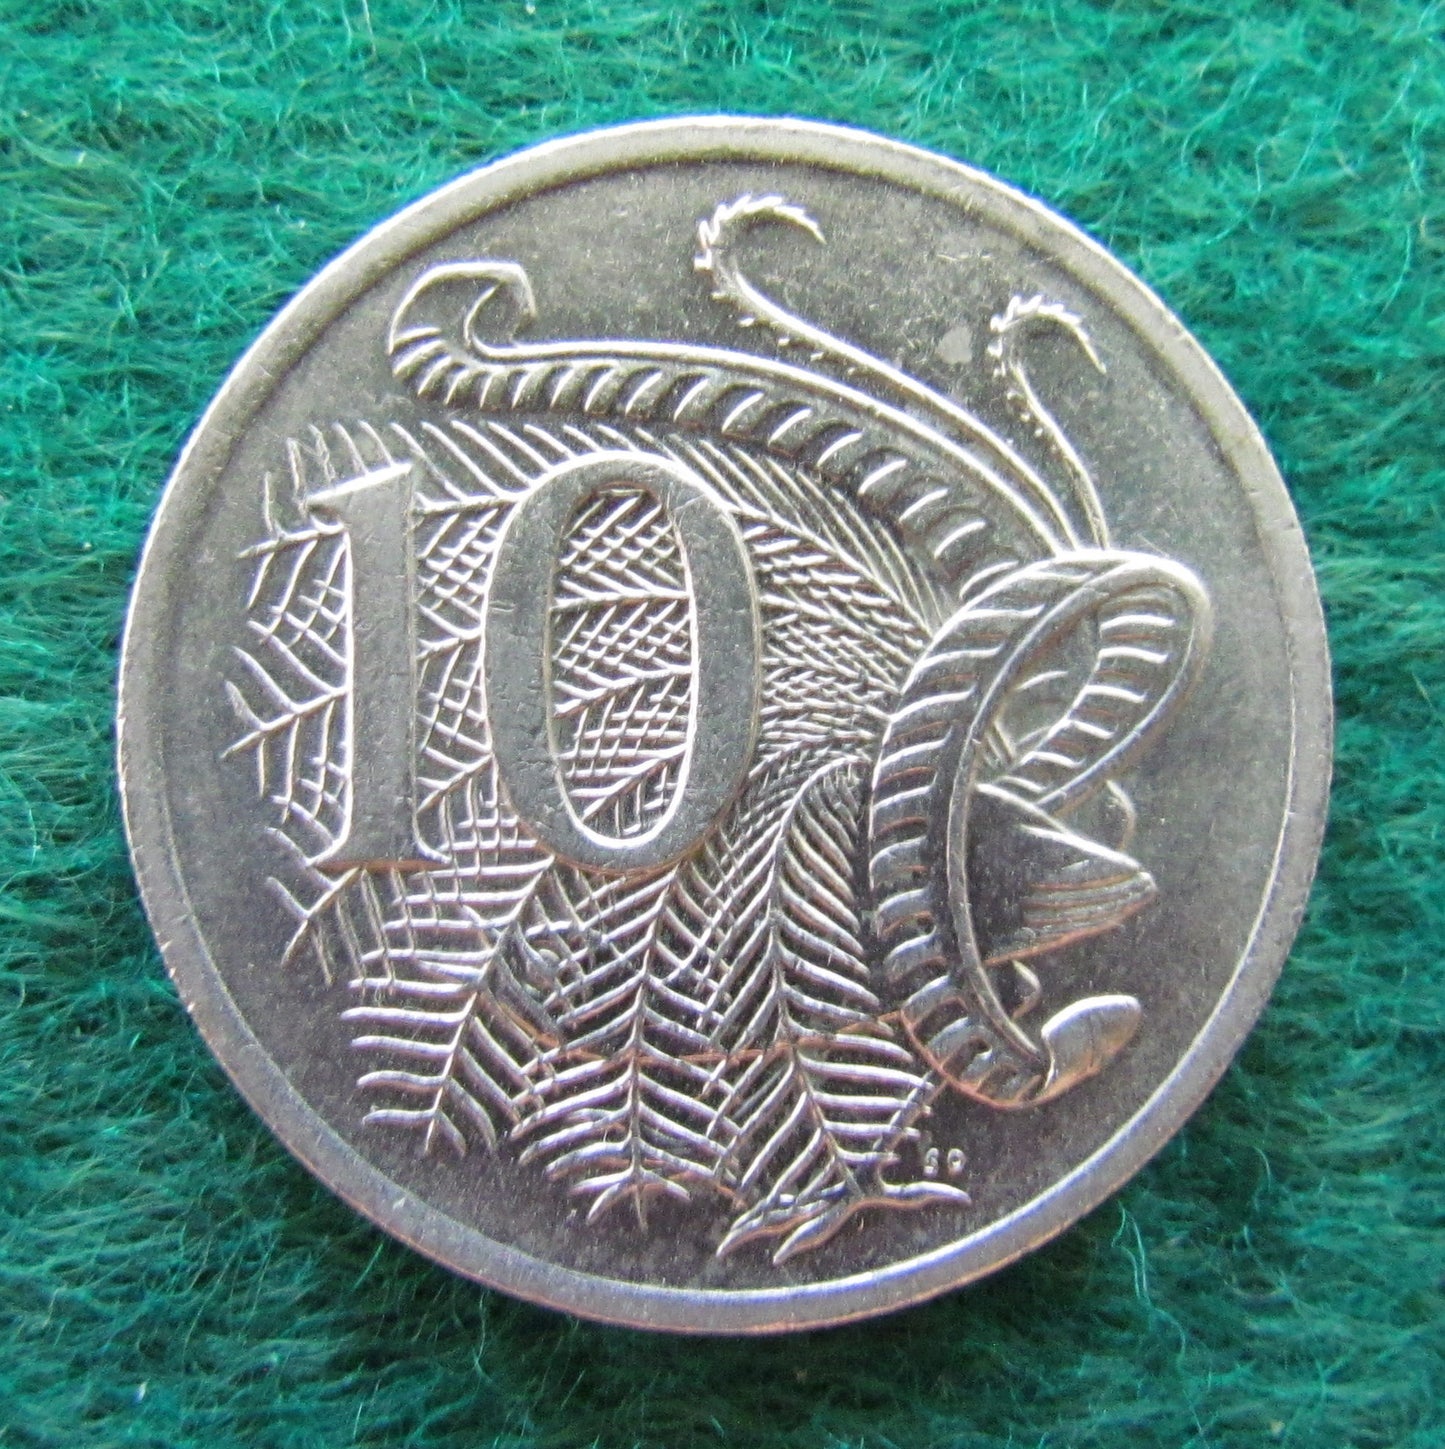 Australian 1984 10 Cent Queen Elizabeth II Coin - Circulated